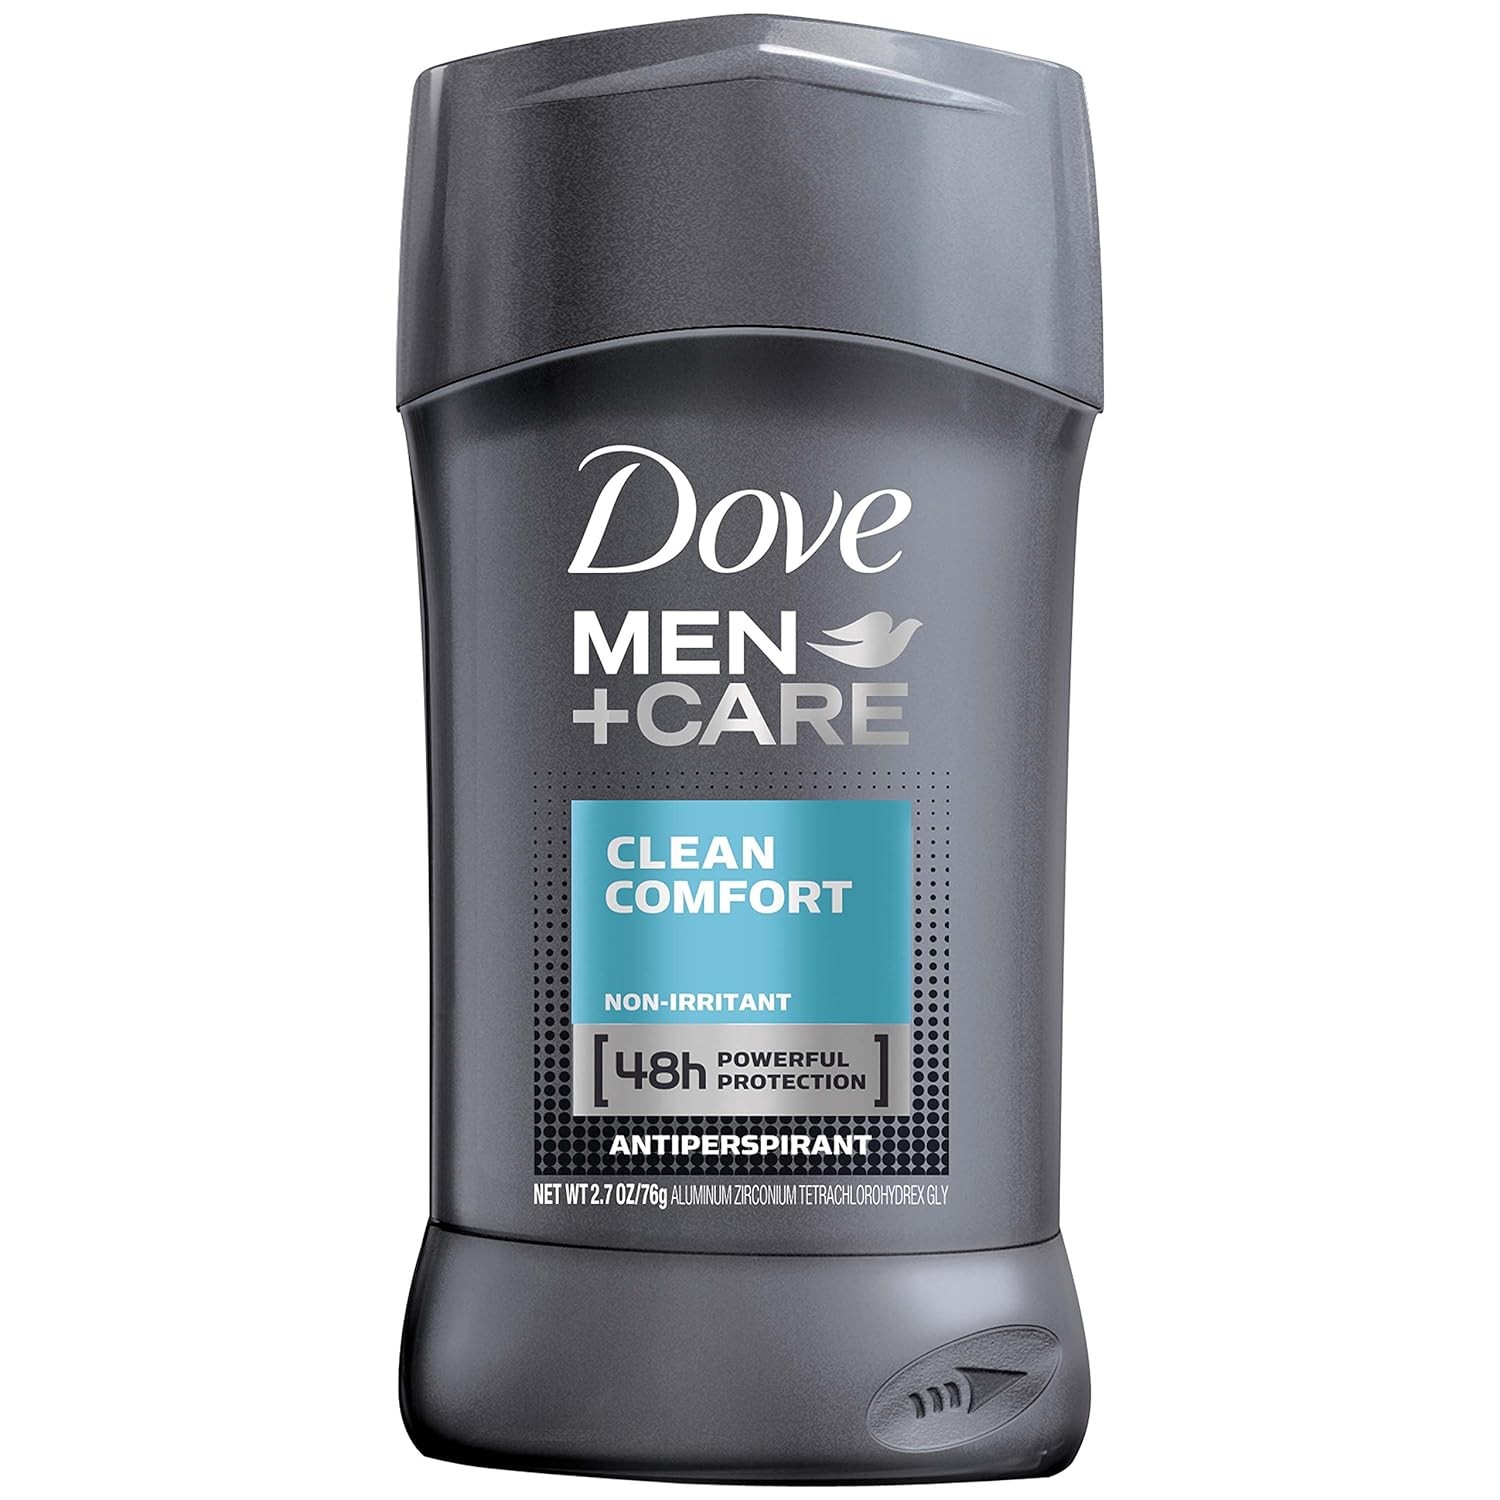 Dove Men +Care Anti-Perspirant, Clean Comfort 2.7 Oz